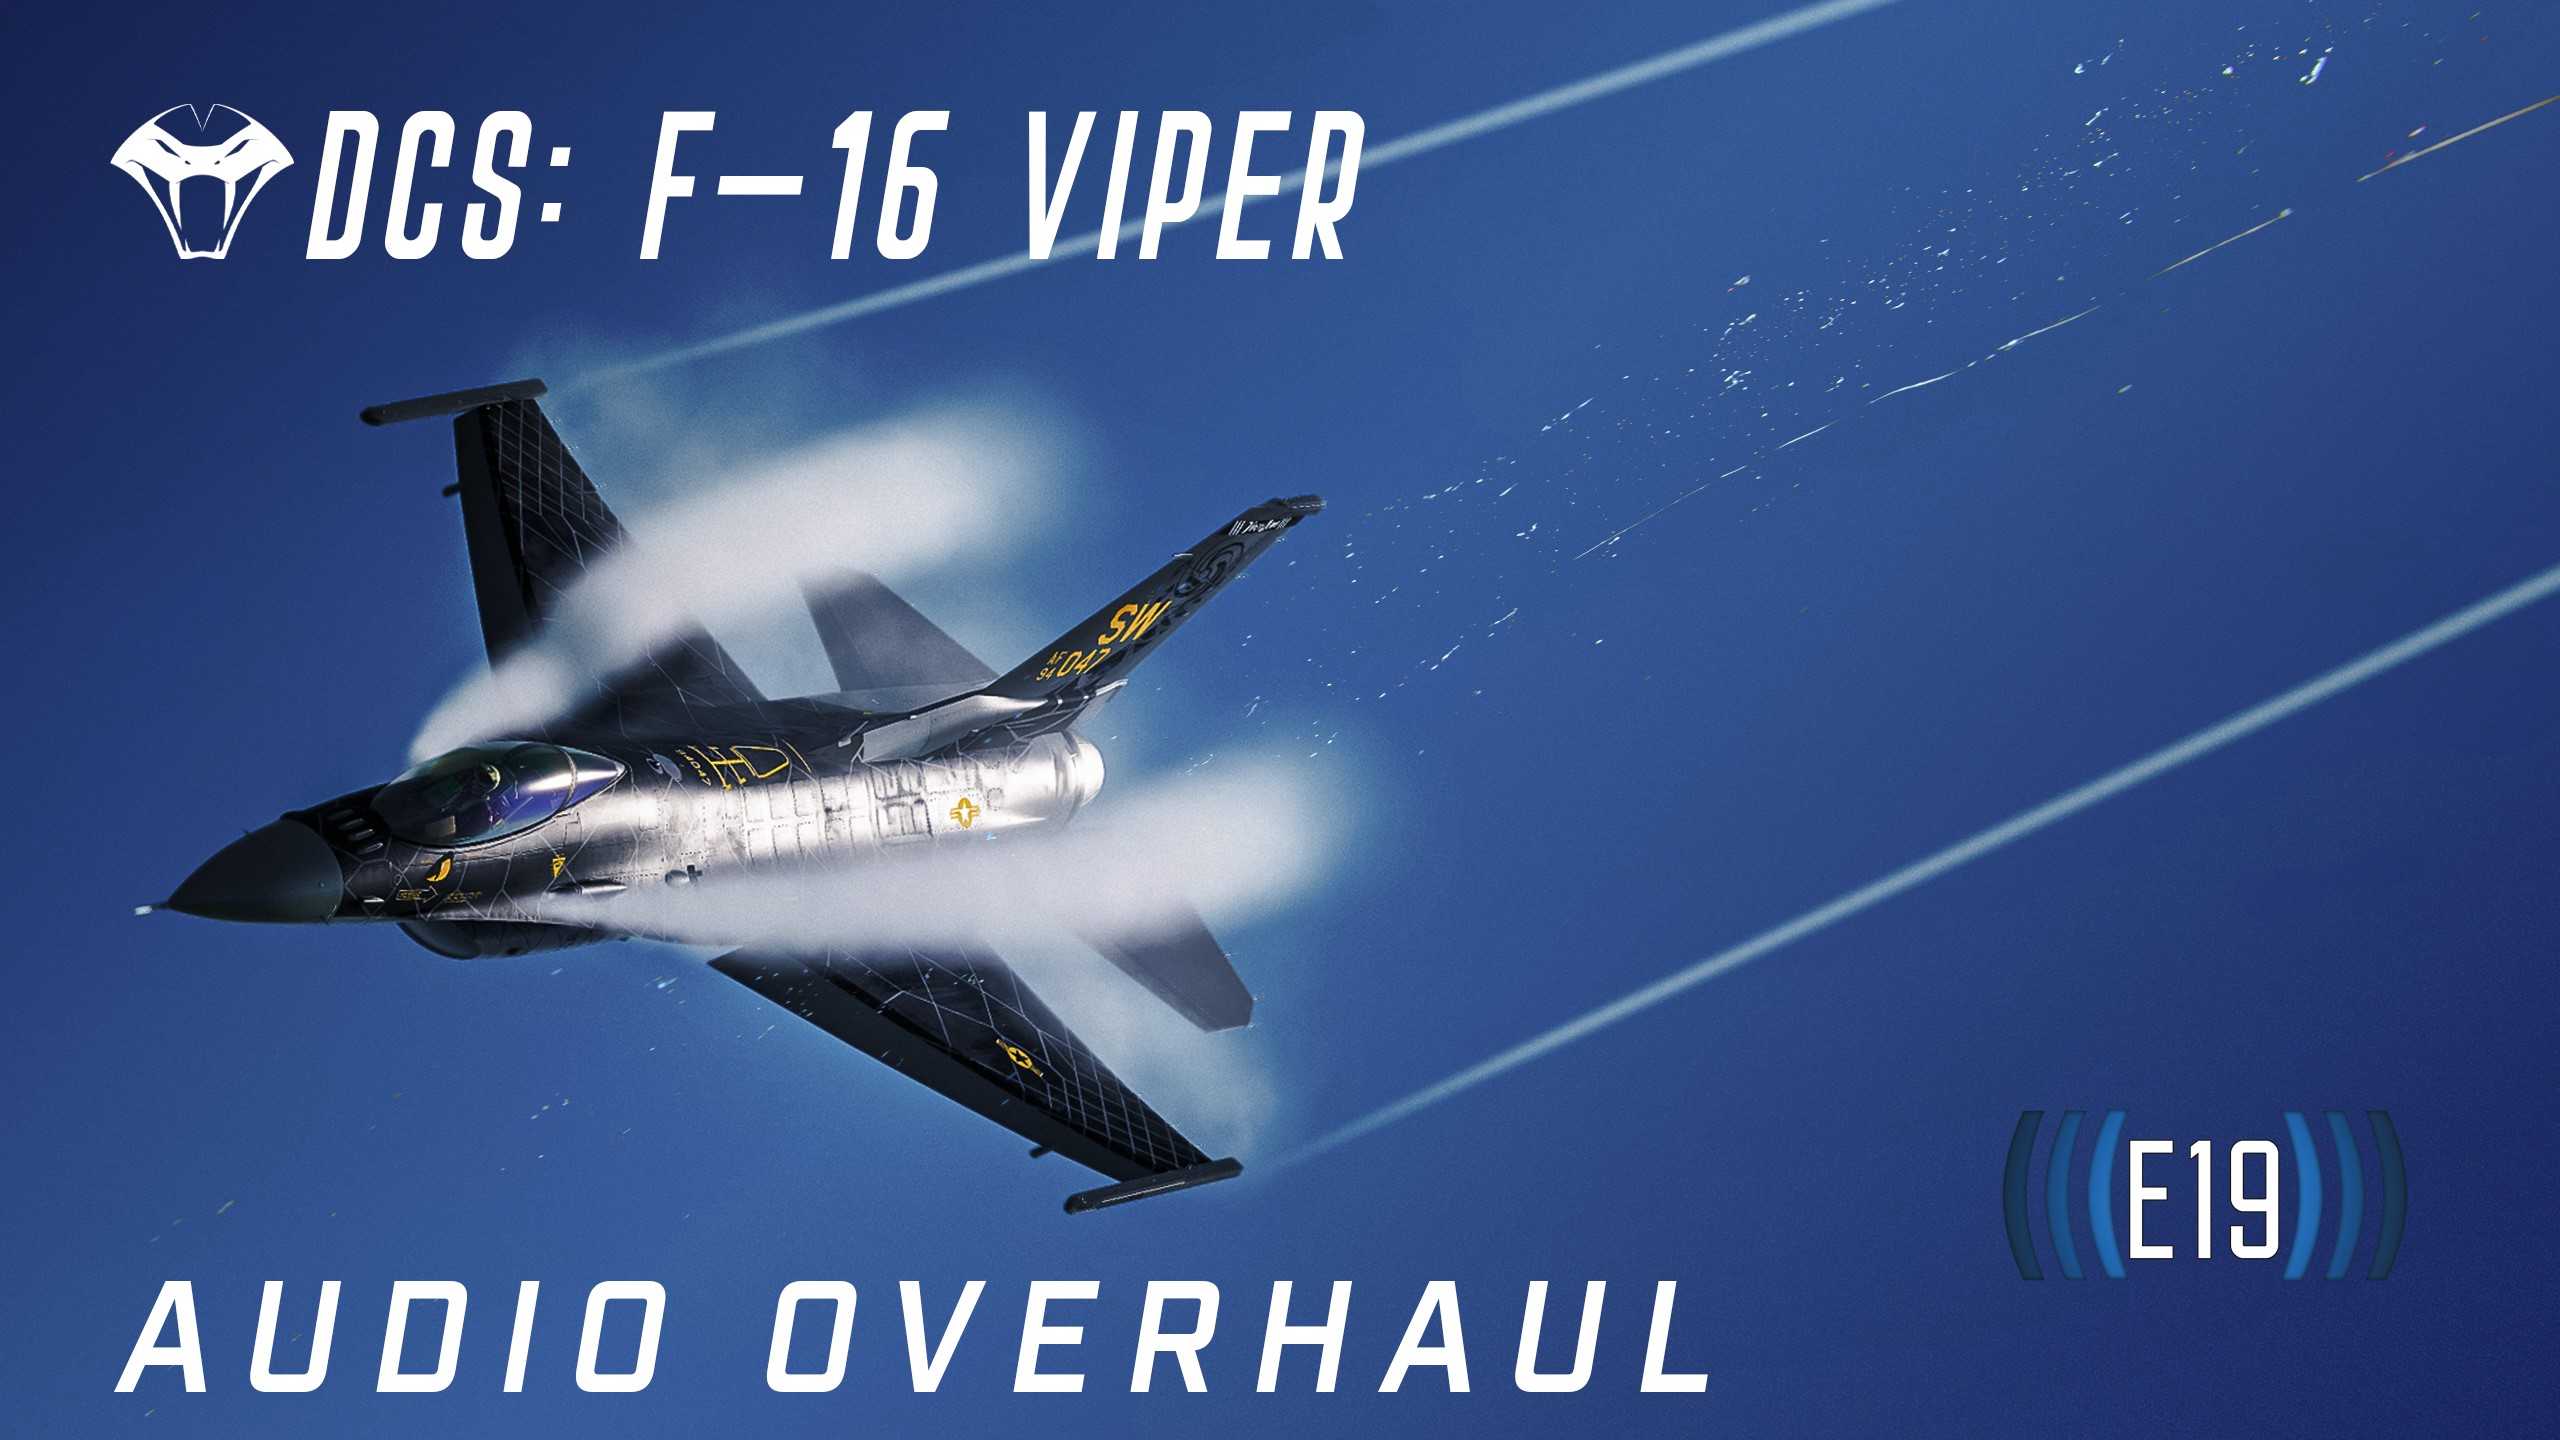 F-16 Viper Audio Overhaul by Echo 19 (old)